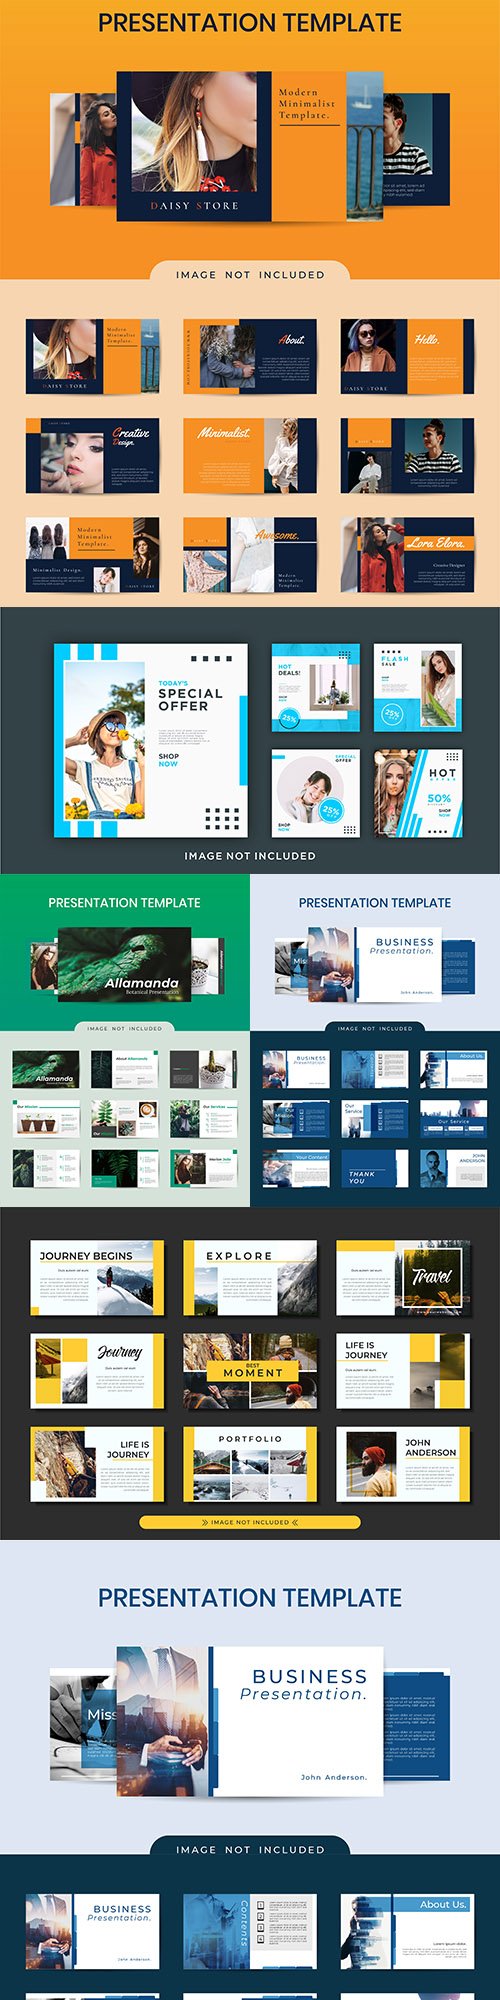 Business presentation template website design